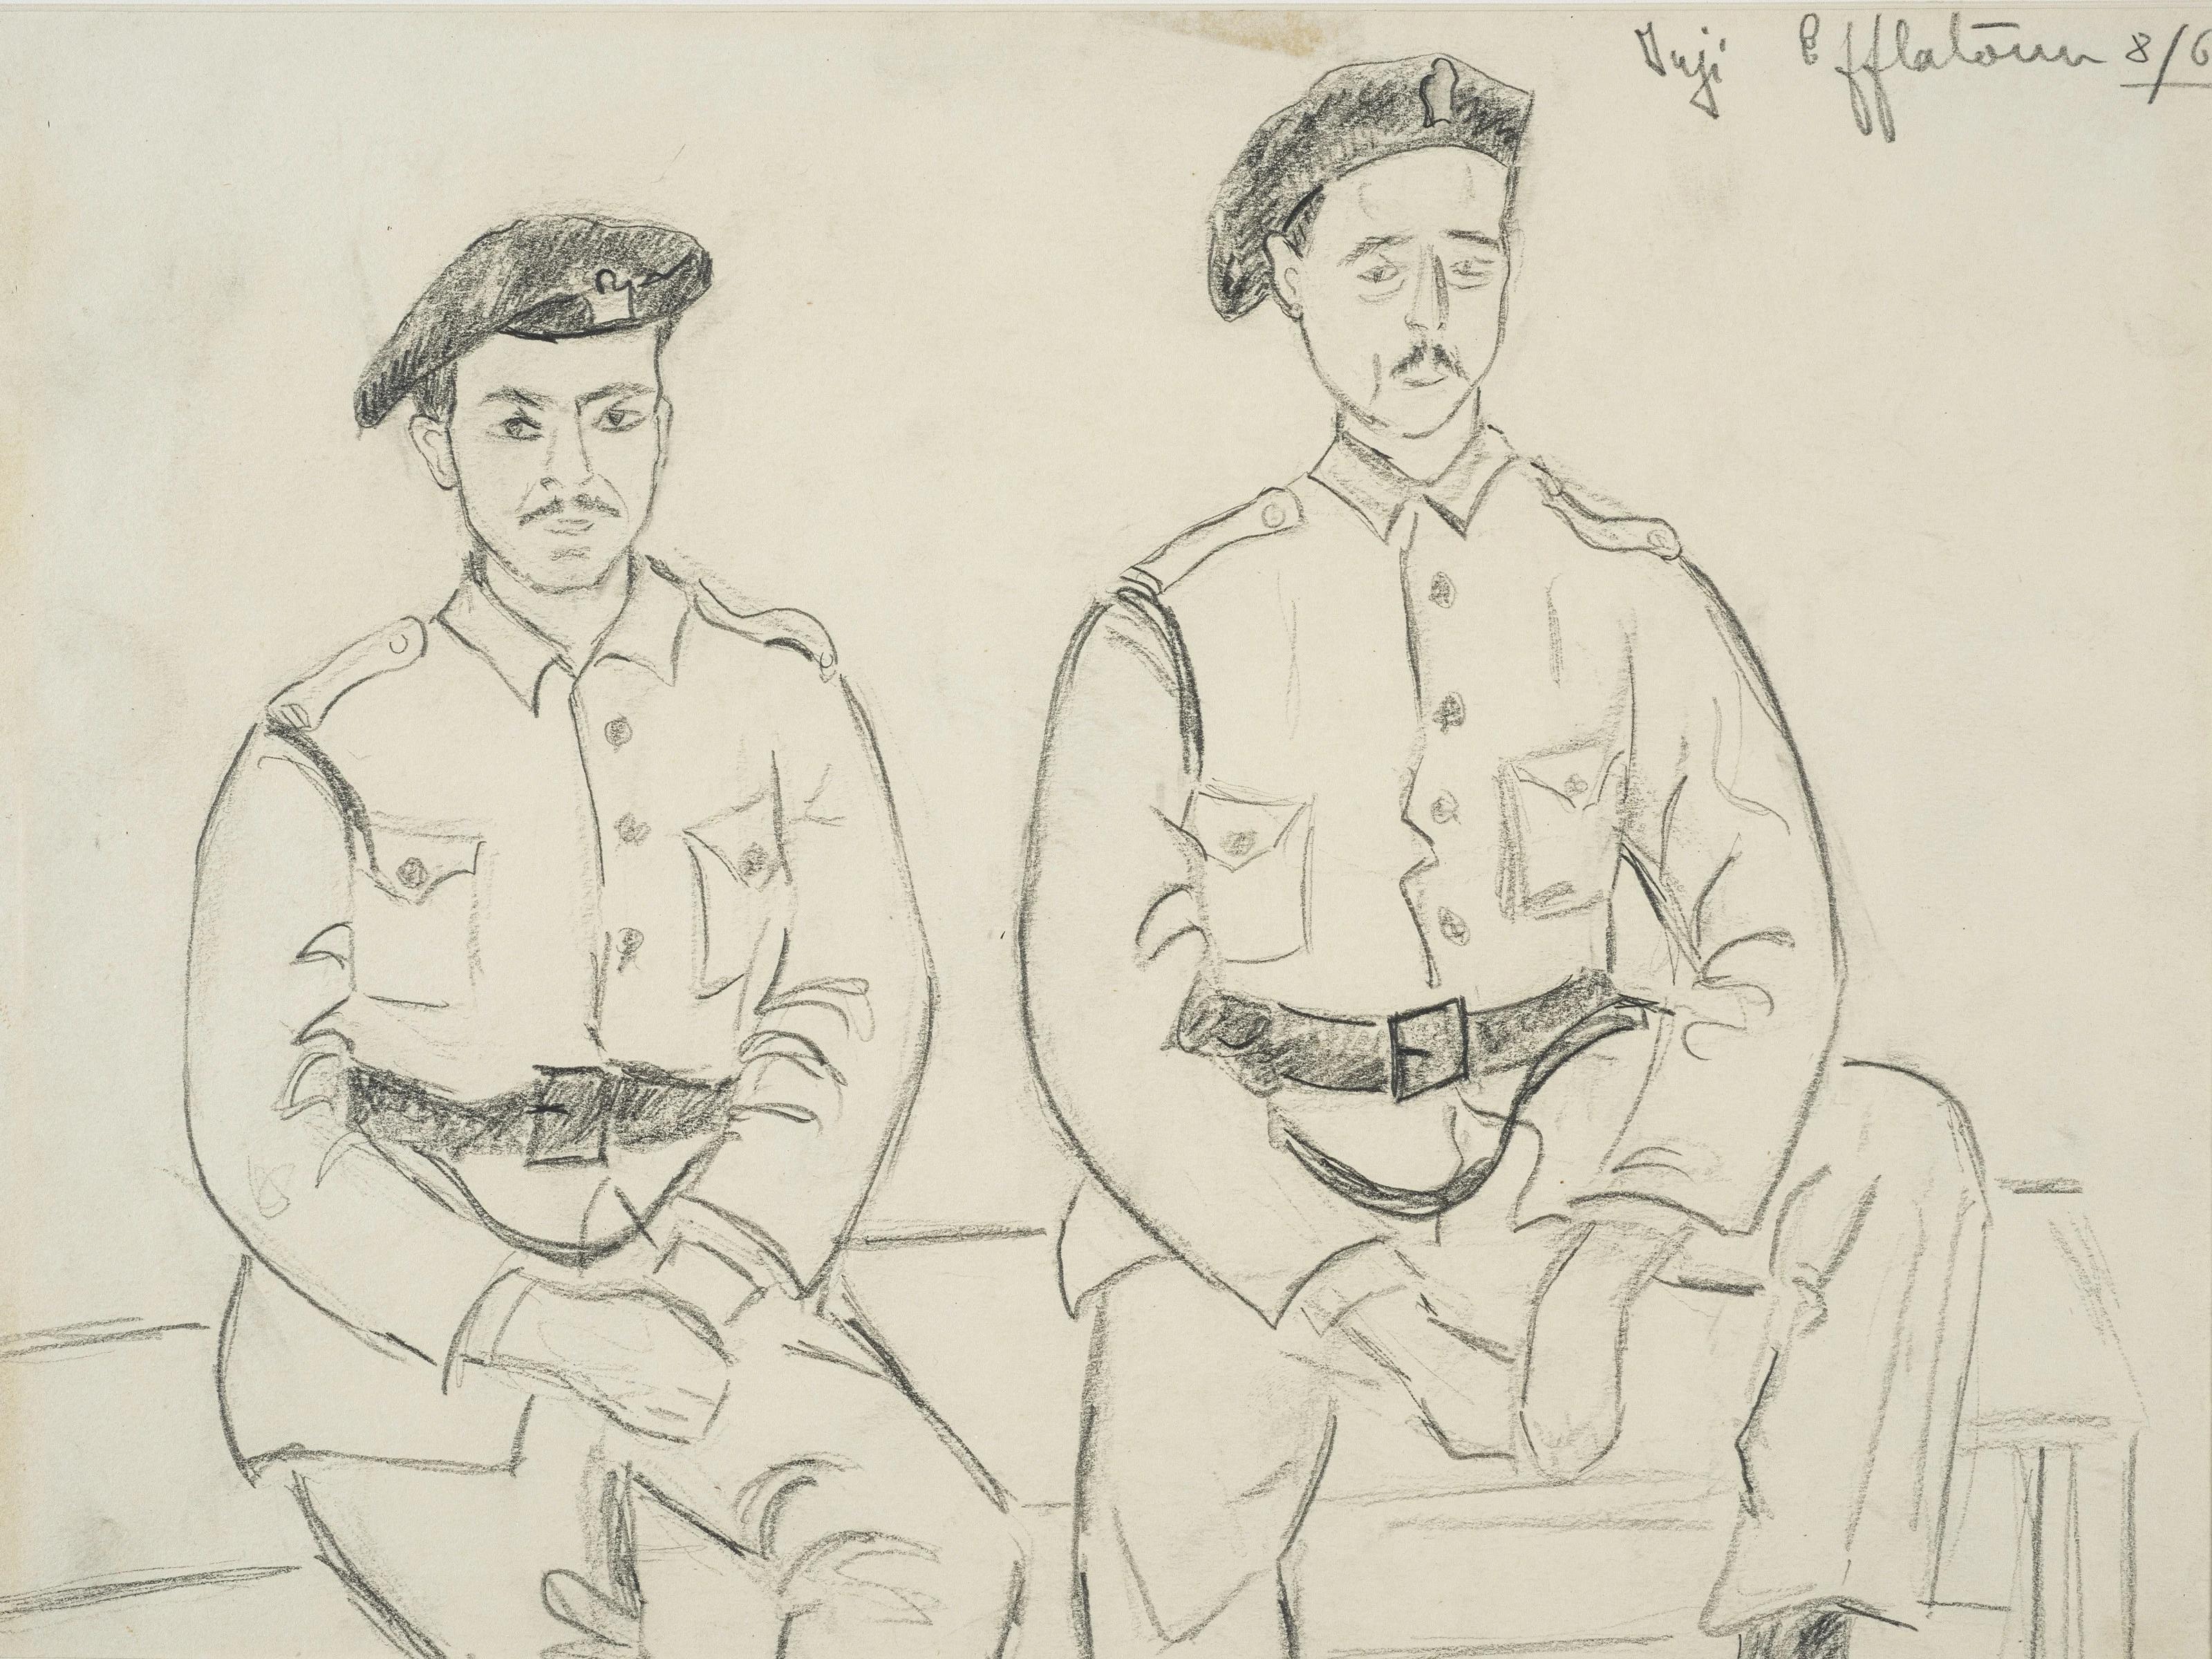 Inji EFFLATOUN Figurative Art - "Seated Officers" Pencil Drawing 10" x 14" inch (1960) by Inji Efflatoun